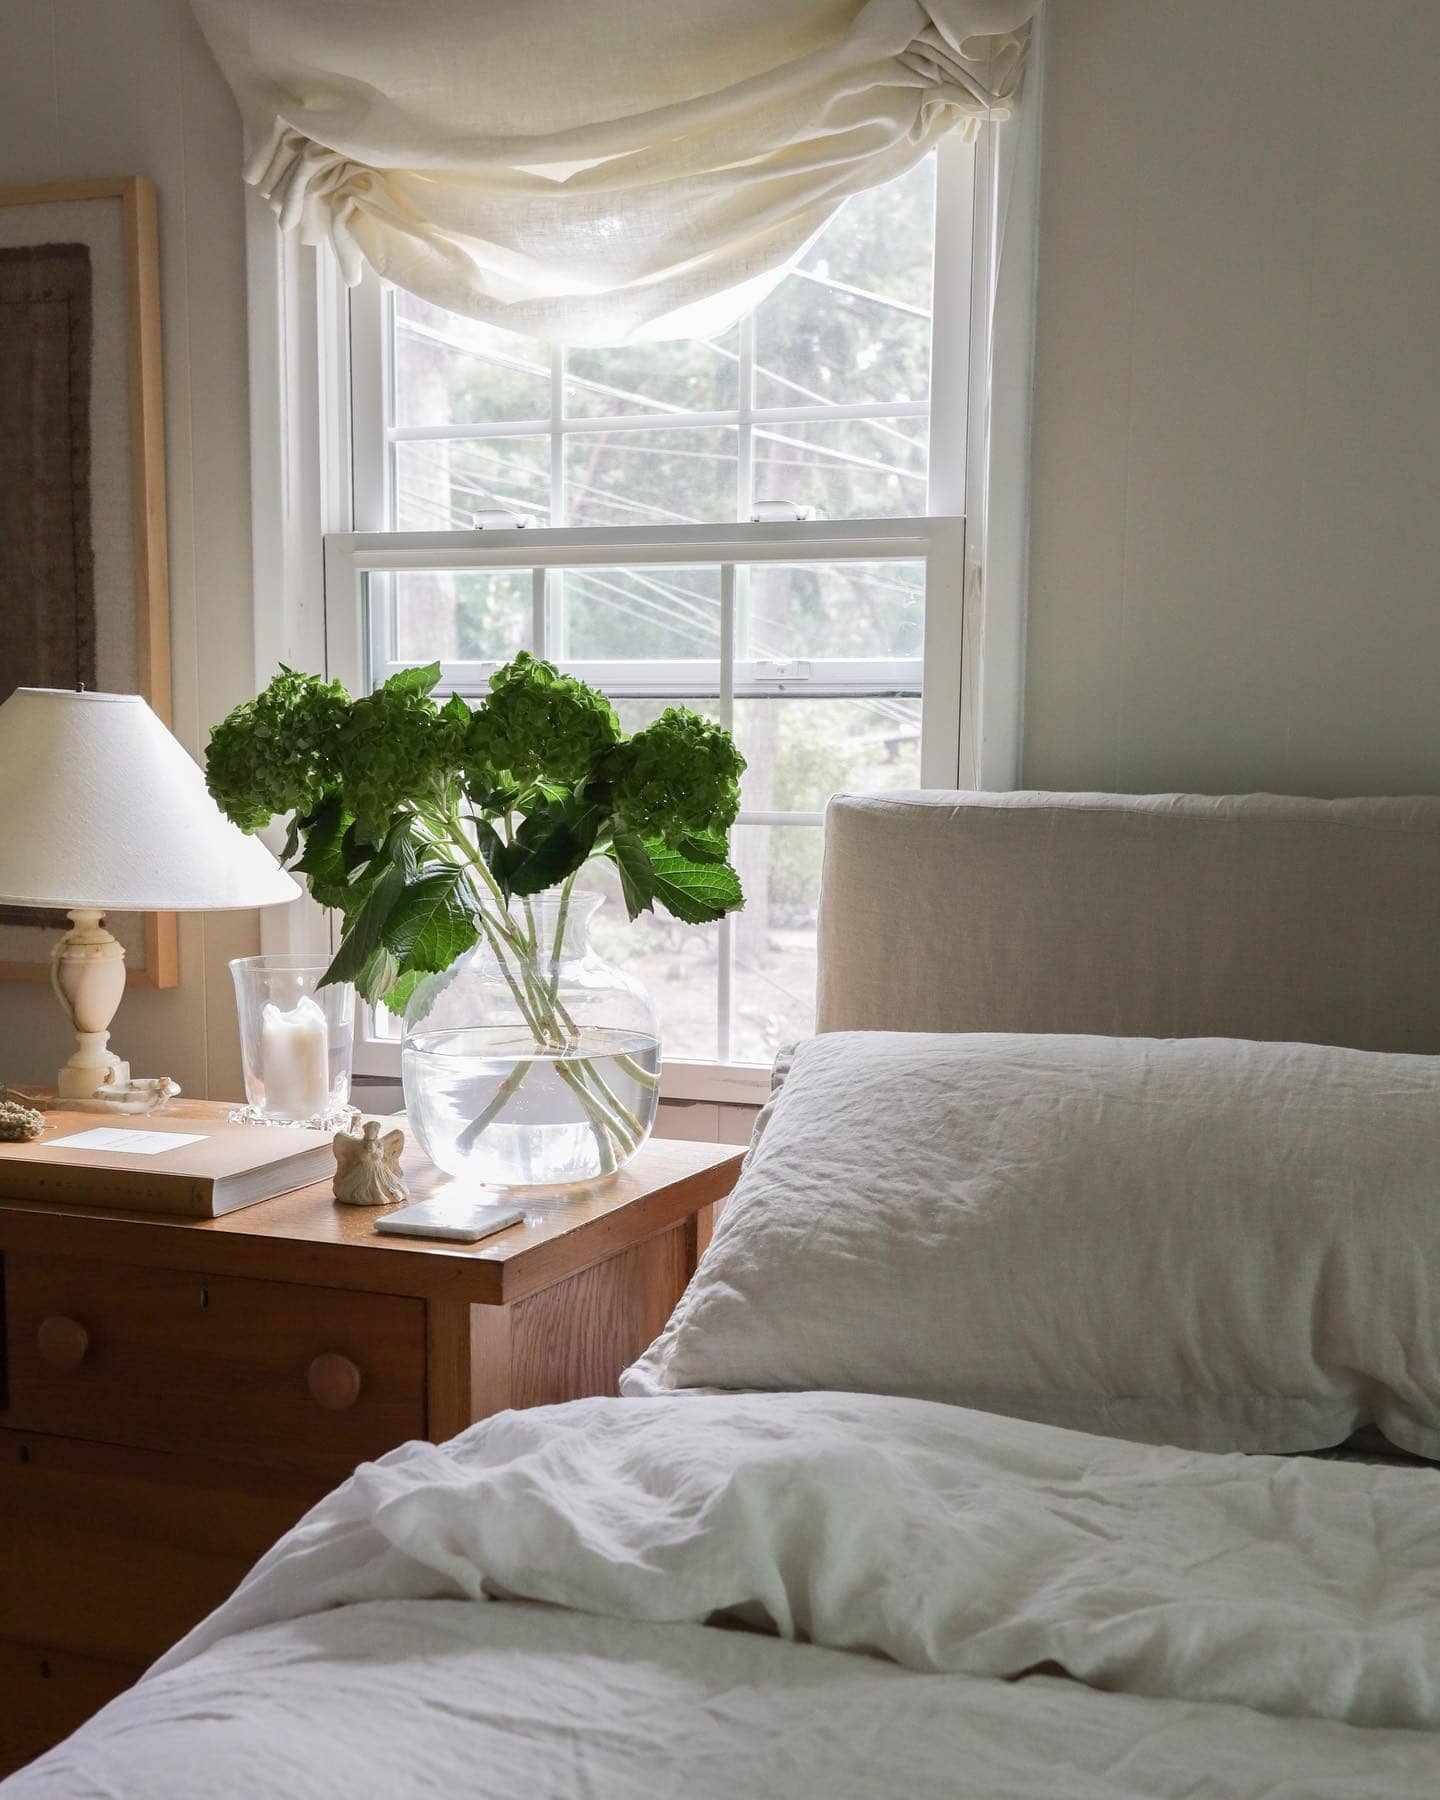 Bedroom window treatment featured as a maximize natural light idea